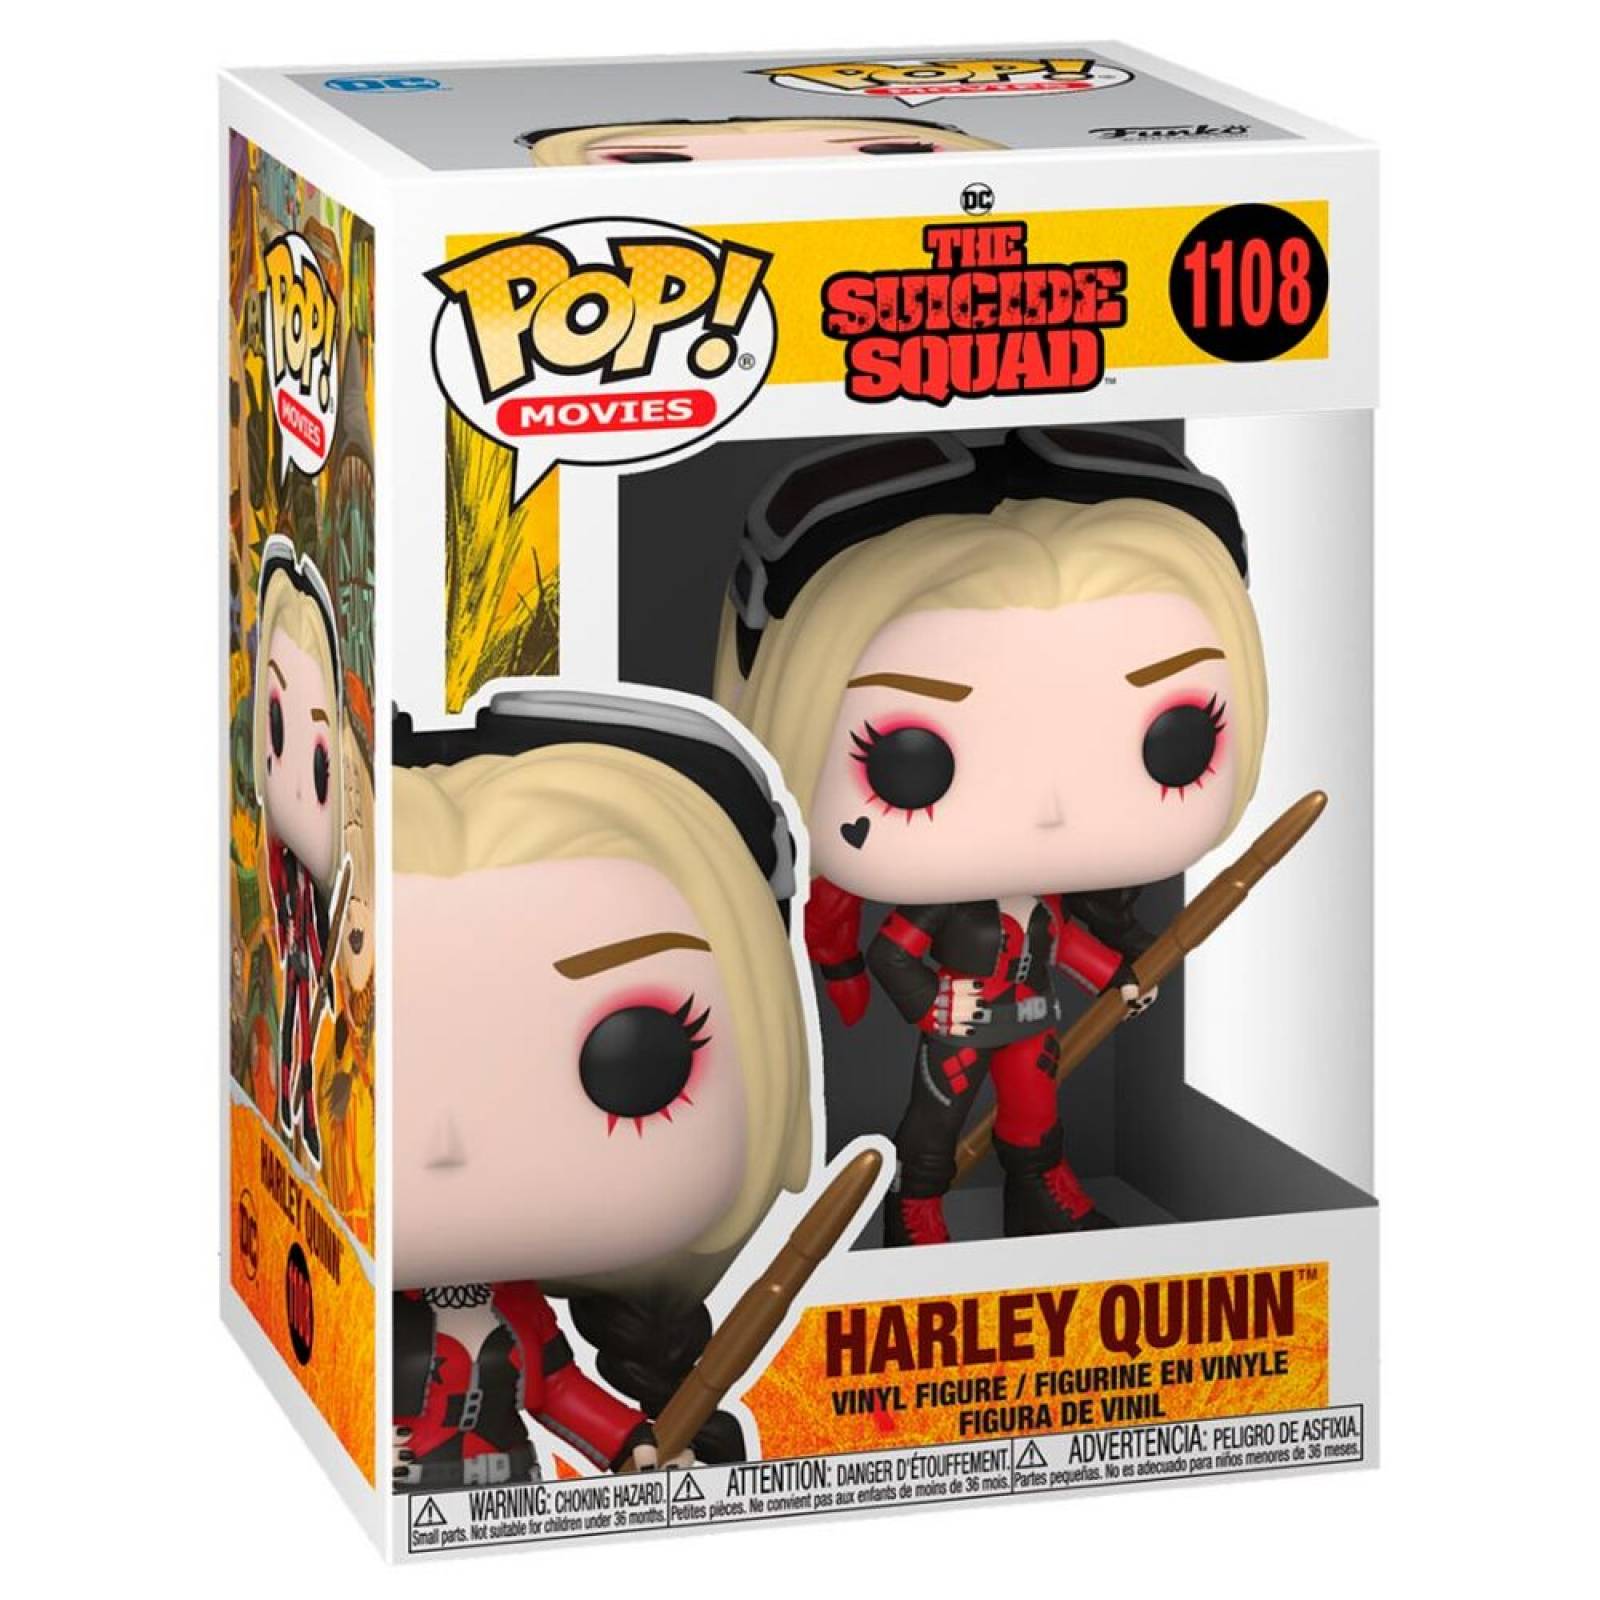 Harley Quinn - Suicide Squad Funko Pop Movies #1108